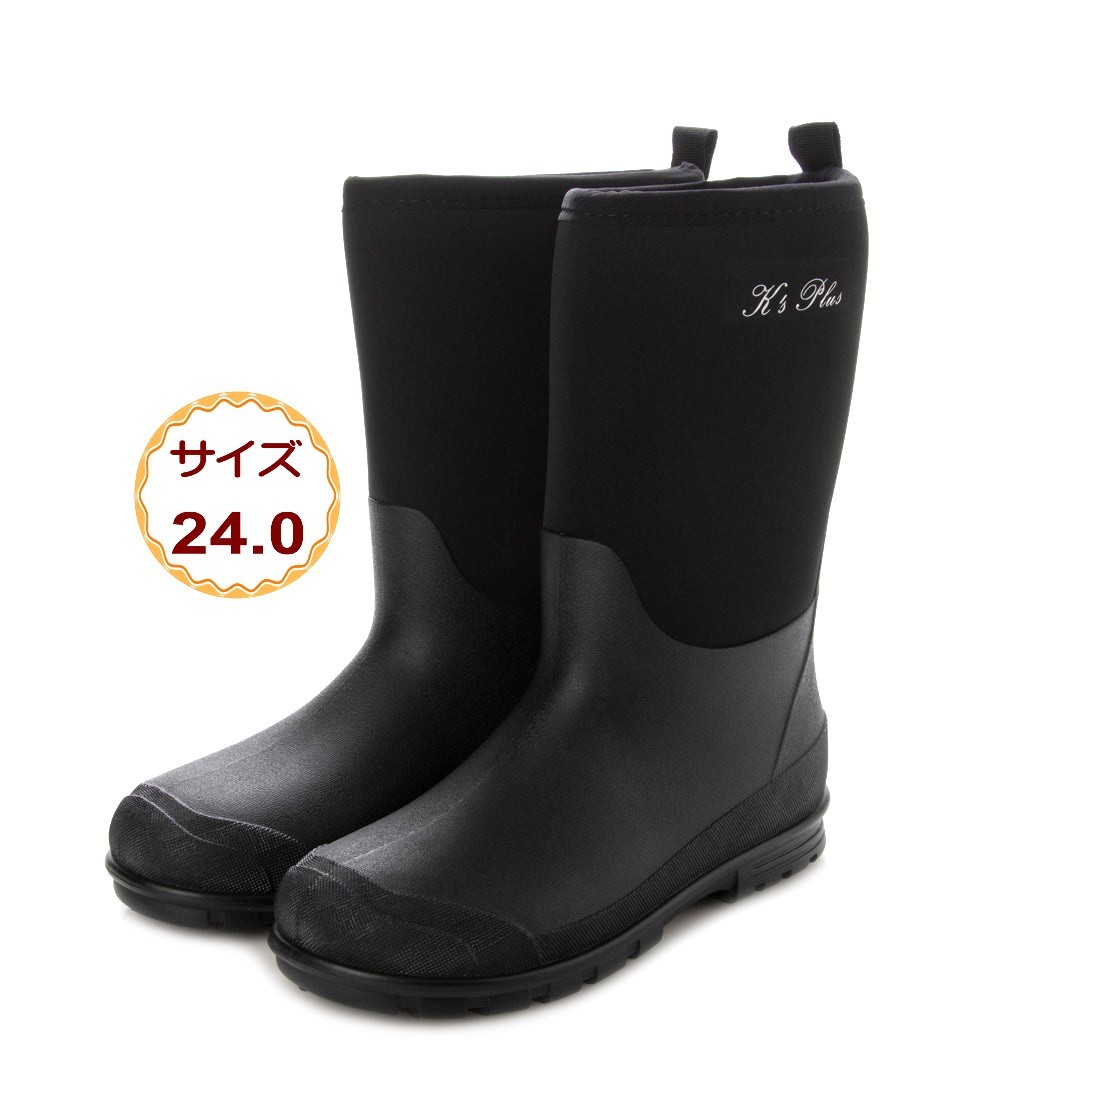  black 24.0cm lady's rain boots rain shoes rain boots boots Neo pre n waterproof 21077-blk-240